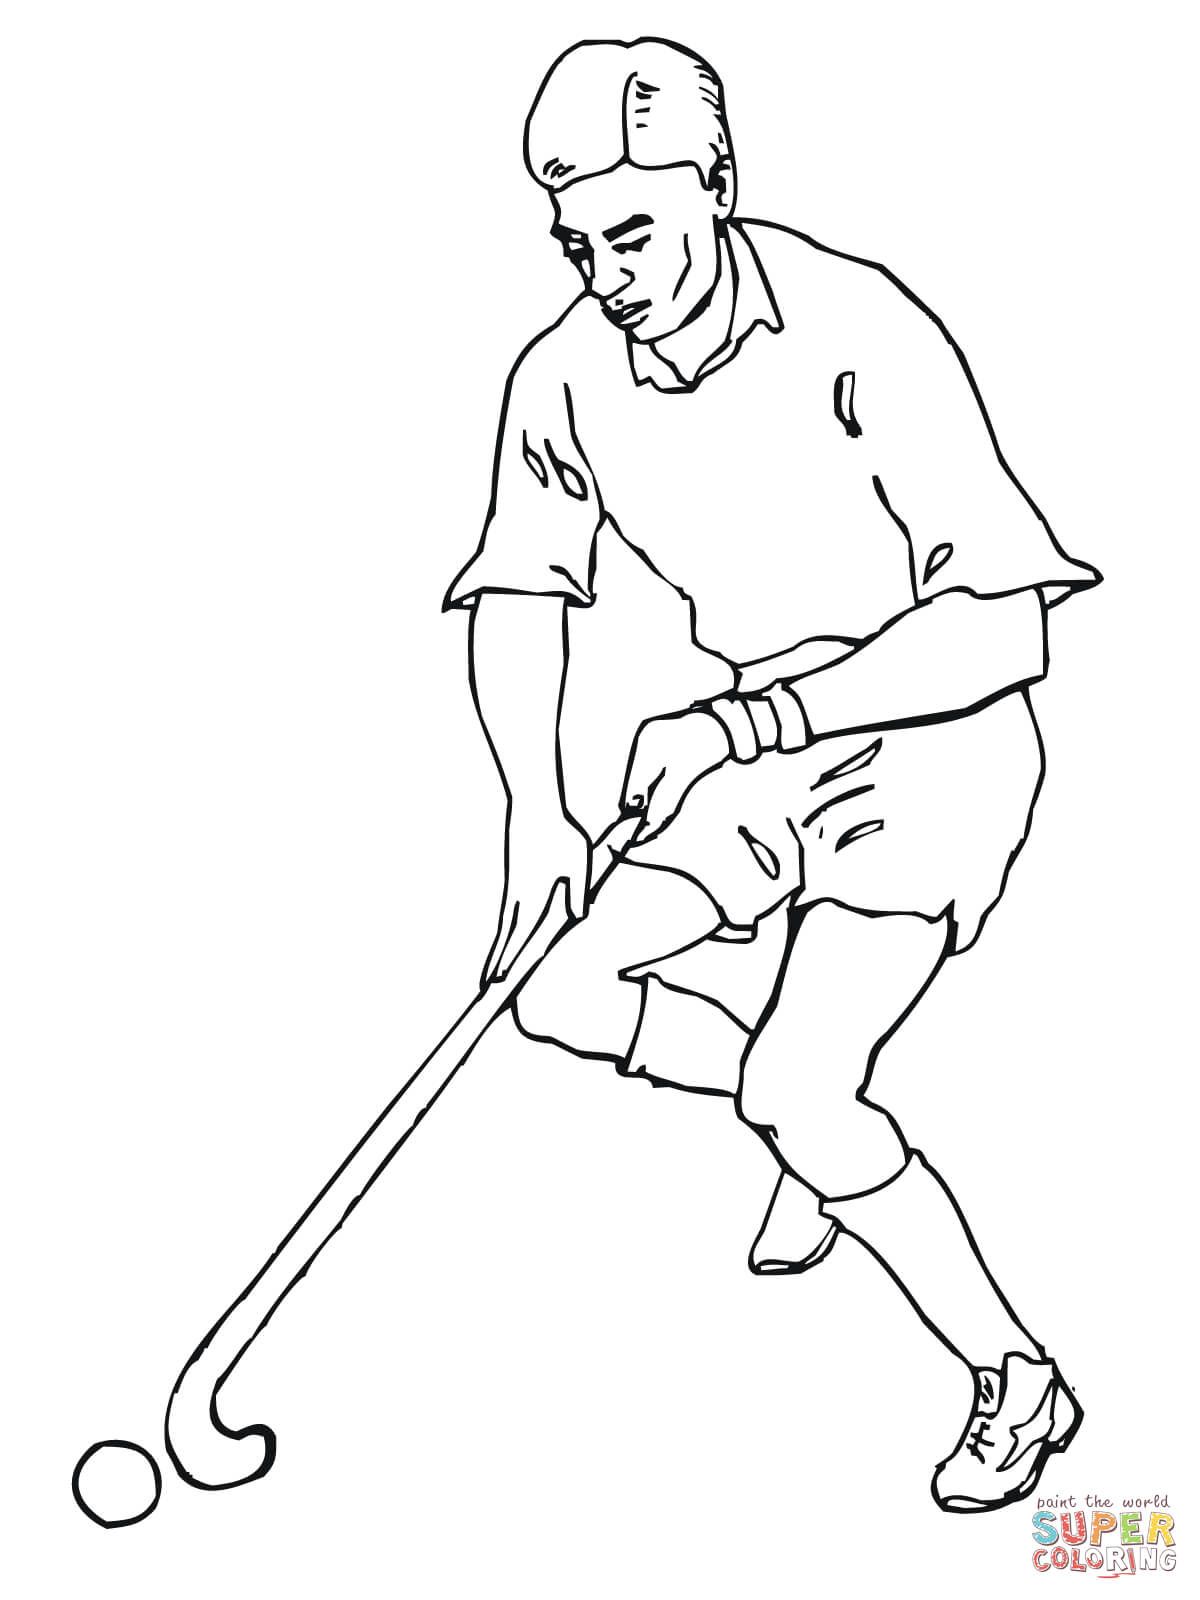 FileSketch street hockeyjpg  Wikimedia Commons